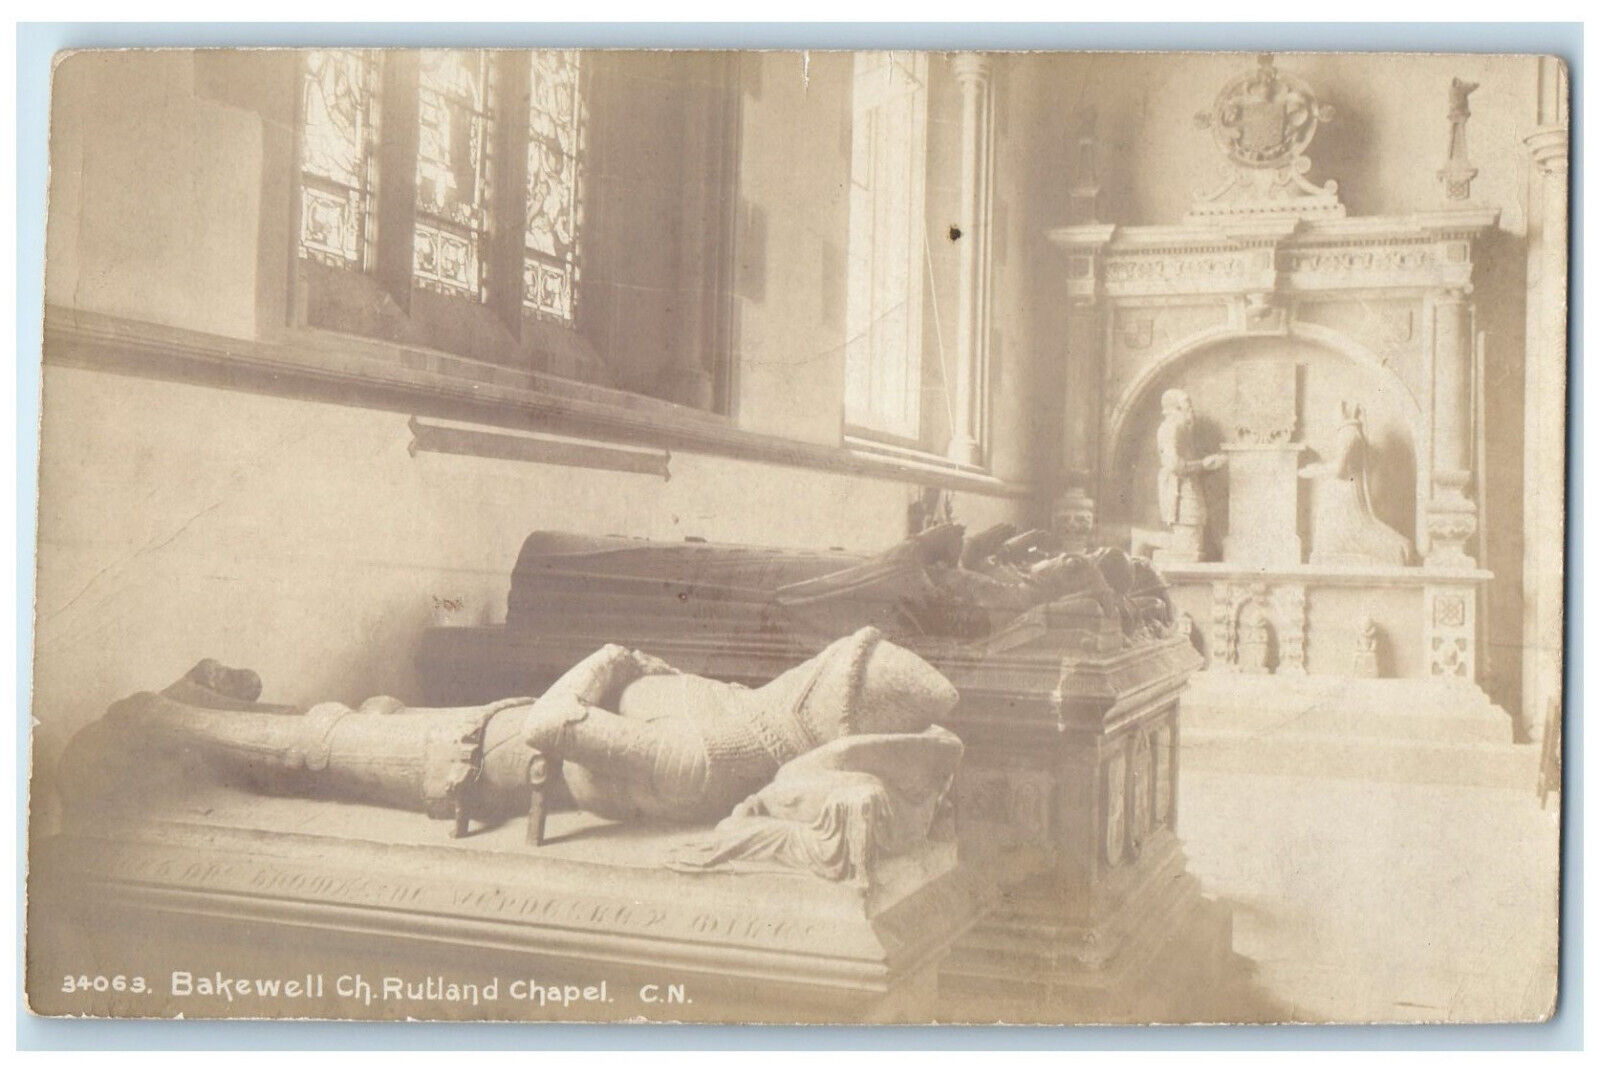 c1940's Bakewell Ch. Rutland Chapel Derbyshire England RPPC Photo Postcard